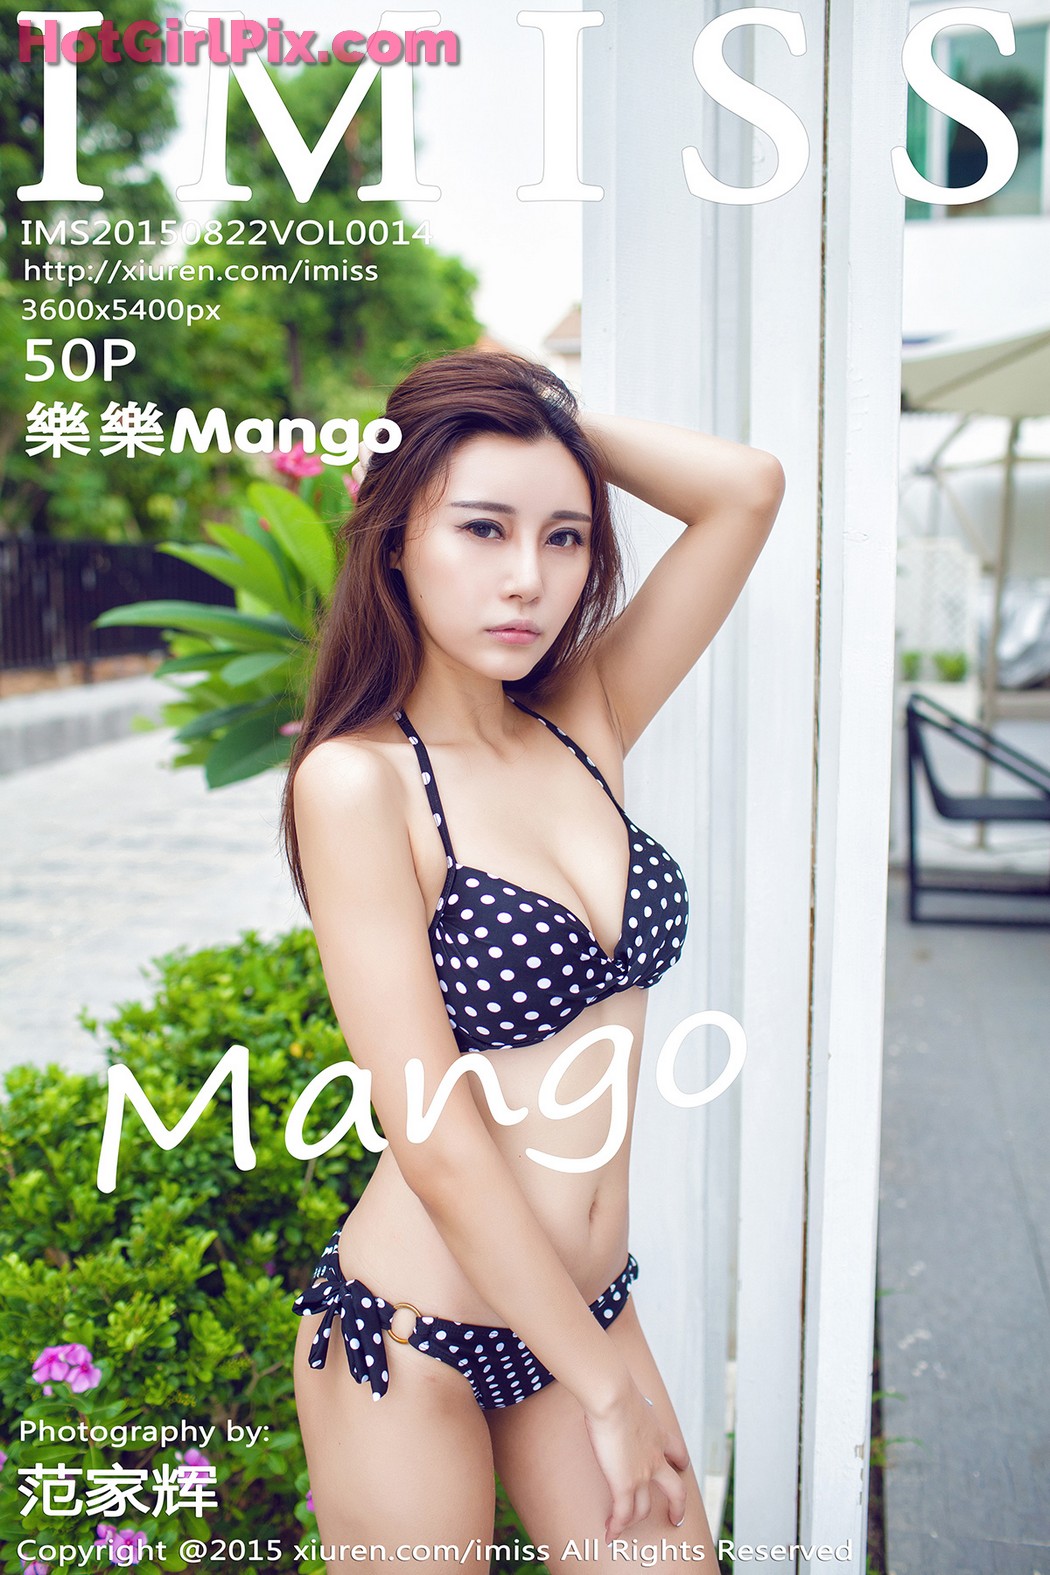 [IMISS] VOL.014 Lele 樂樂Mango Cover Photo